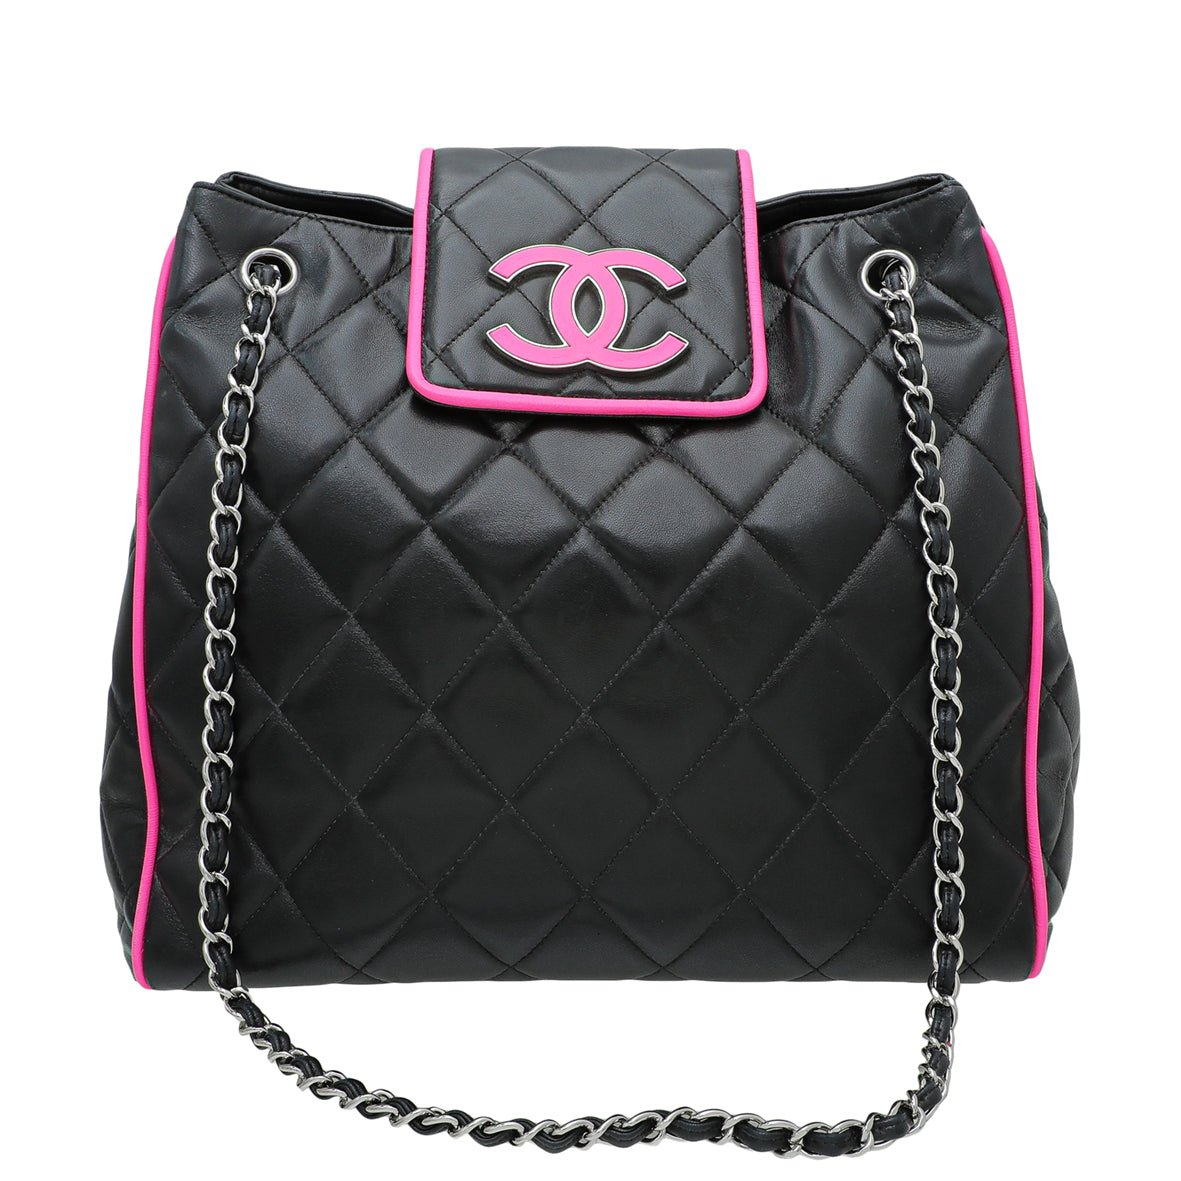 The Closet - Chanel Bicolor CC Divine Shopper Tote Bag | The Closet